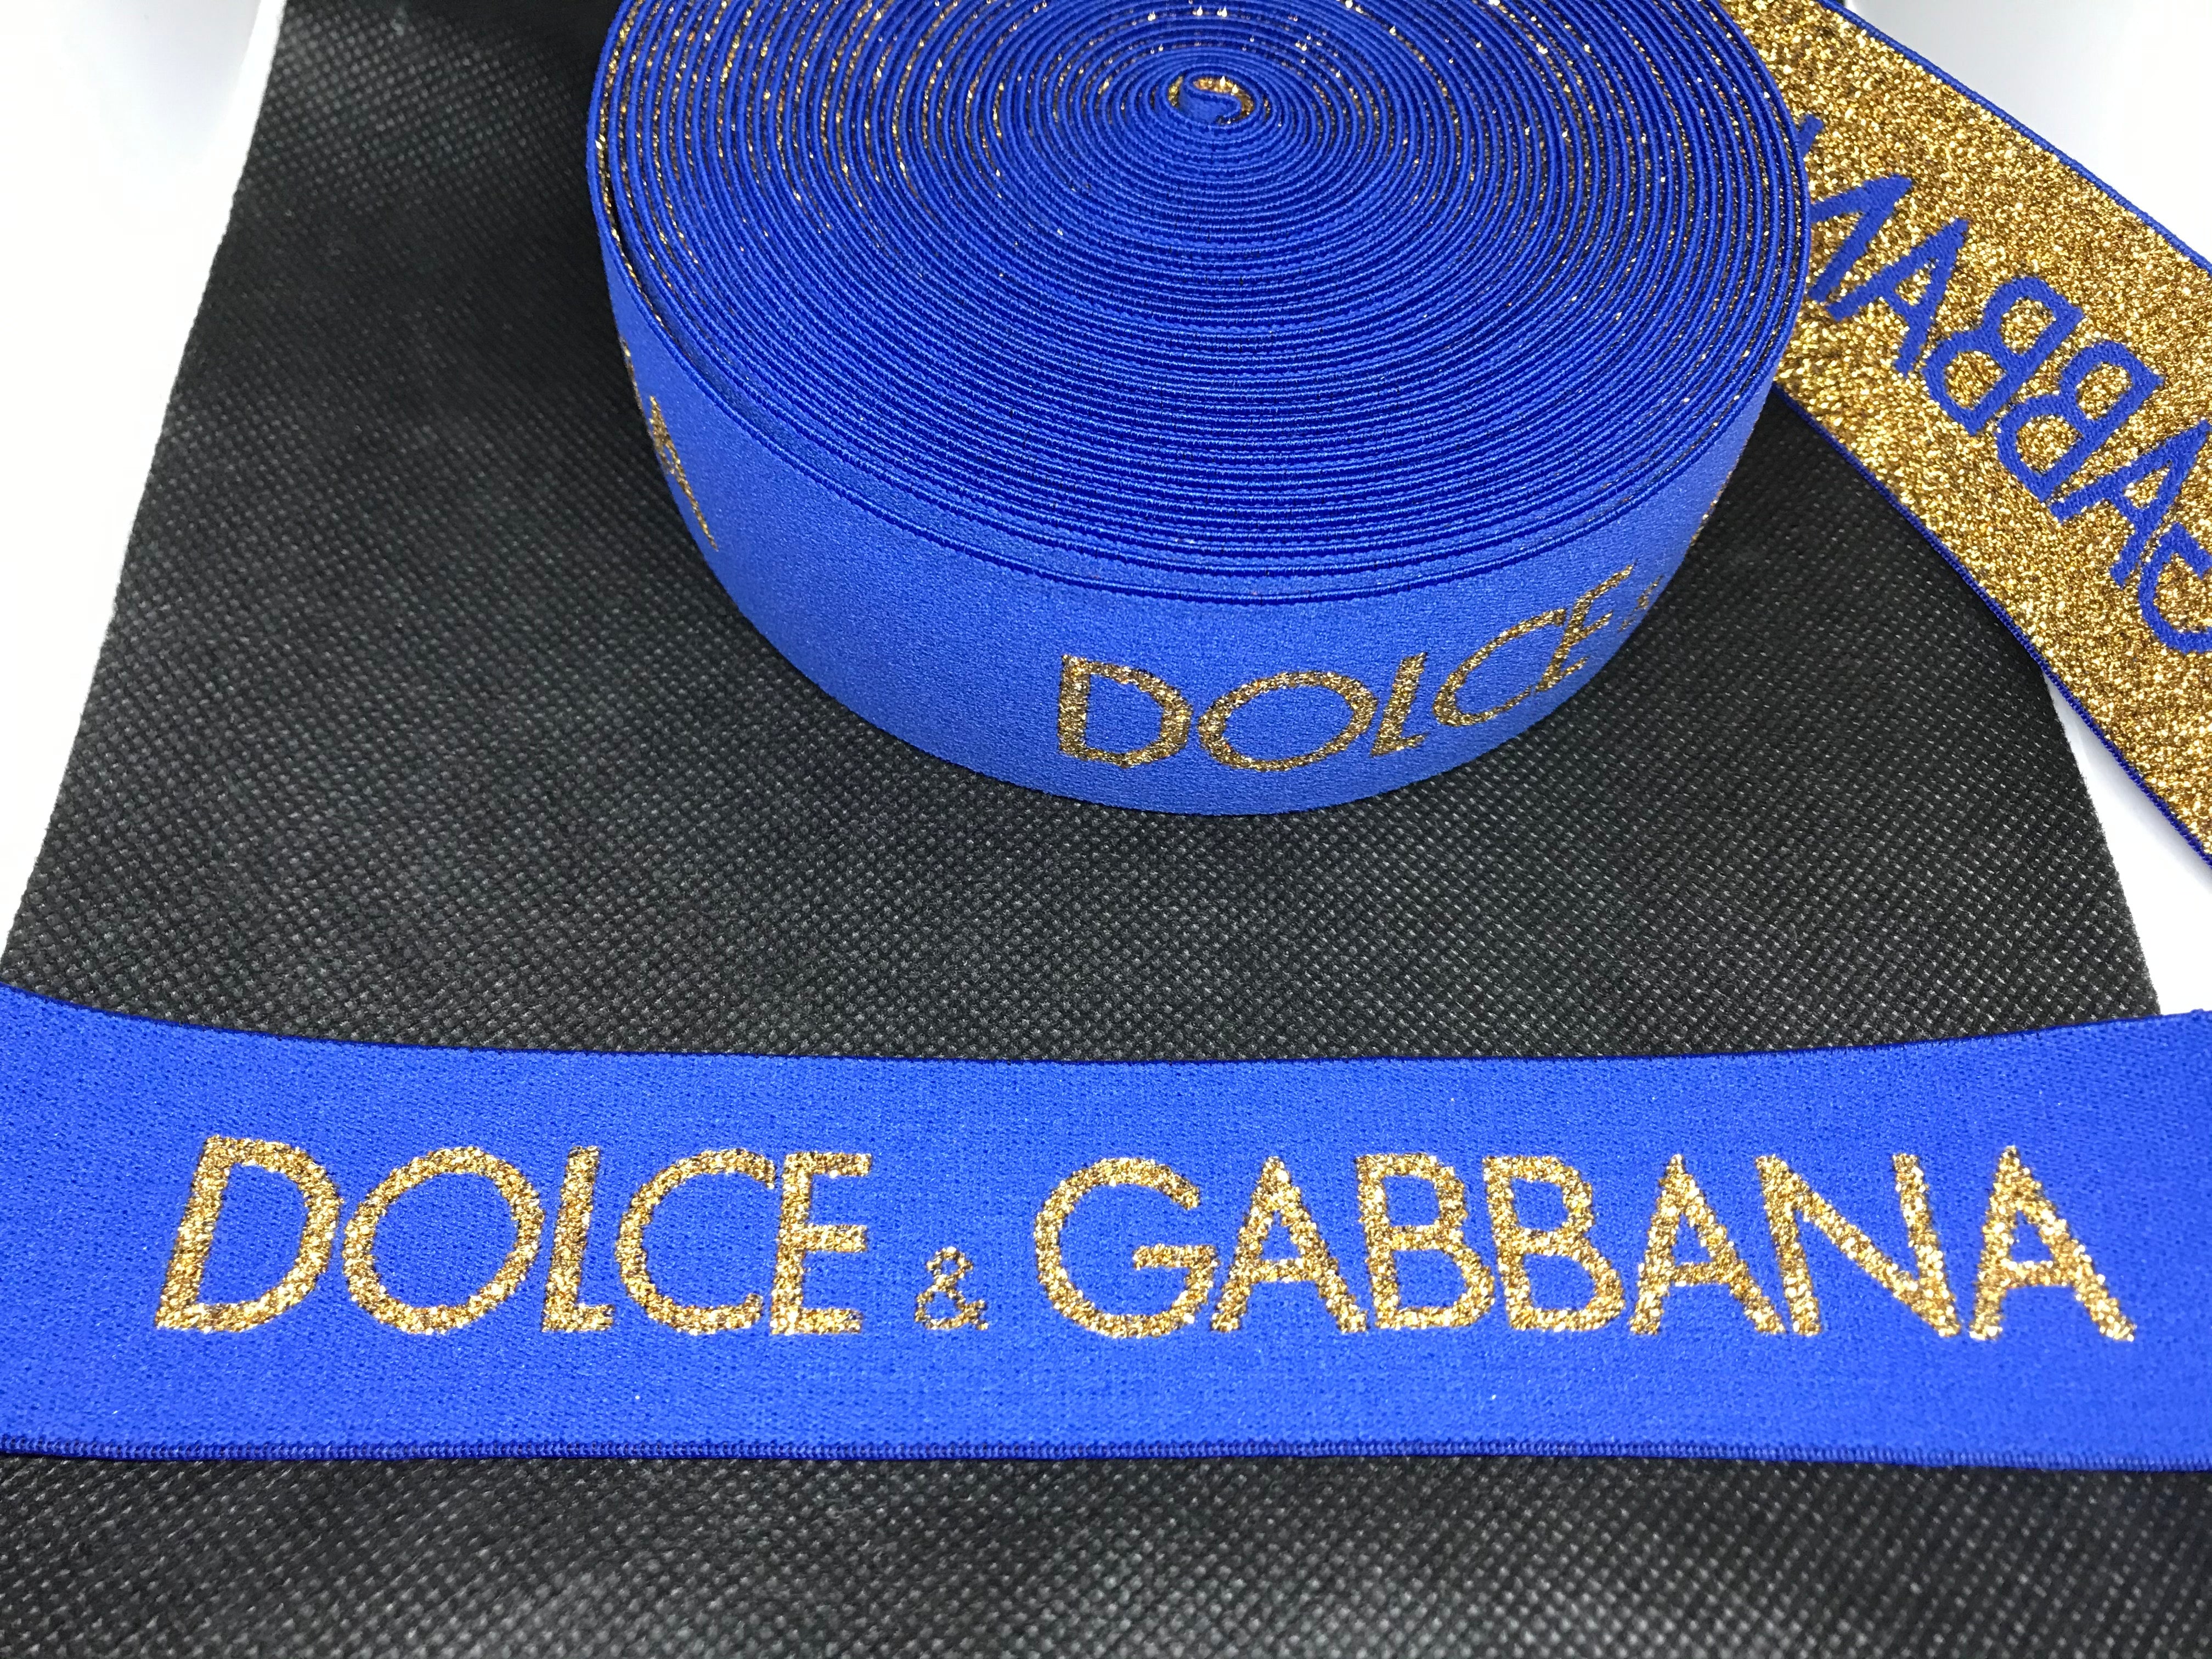 Dolce Gabbana Elastic Band DG –